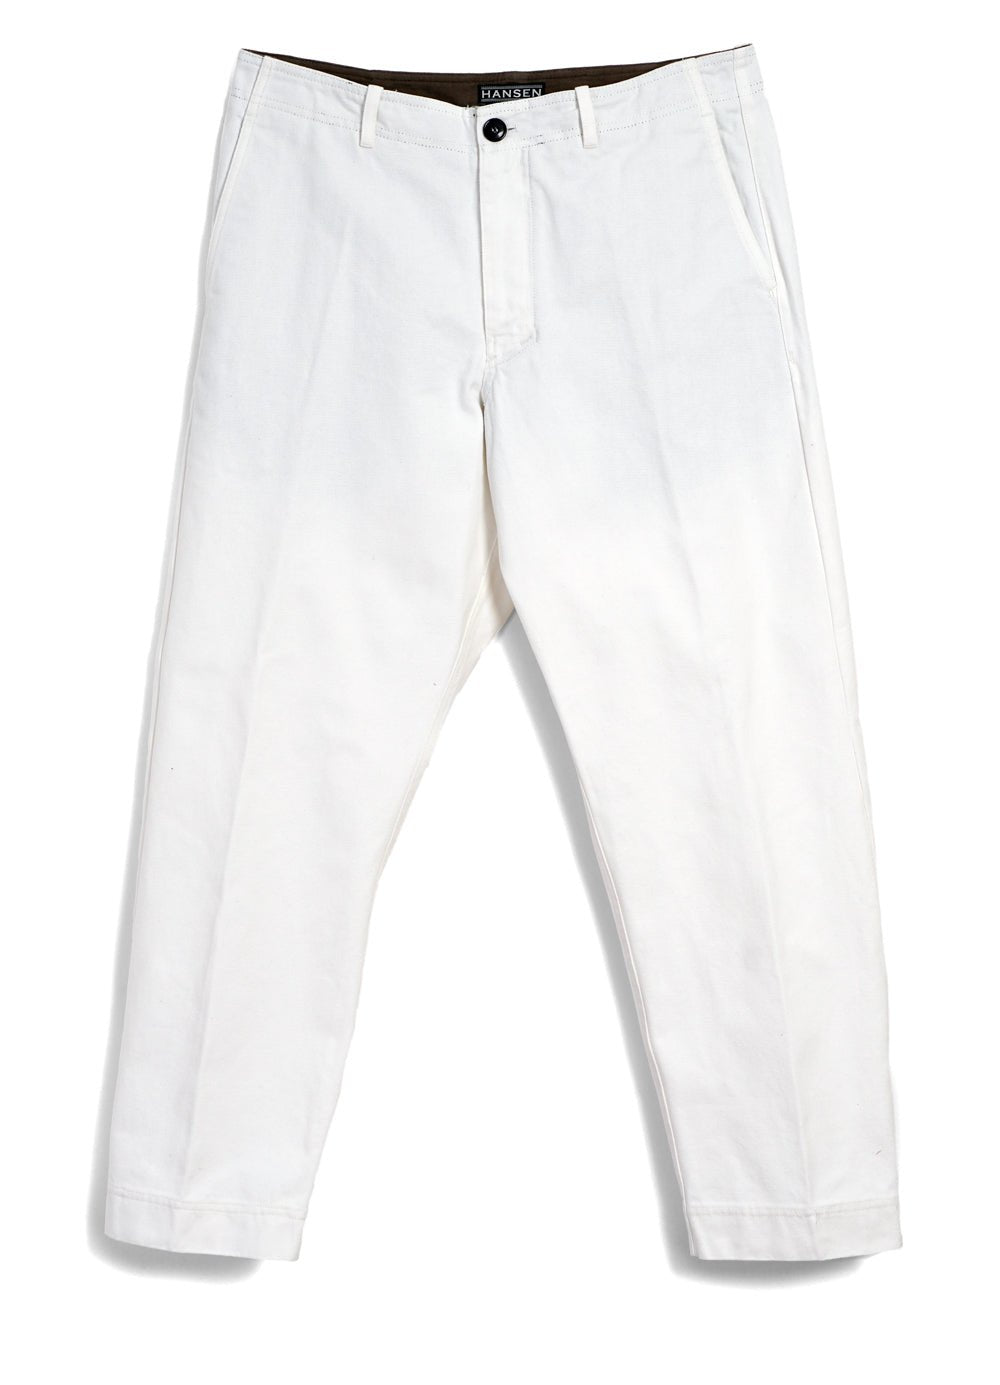 HANSEN GARMENTS - TRYGVE | Wide Cut Cropped Trousers | Off White - HANSEN Garments